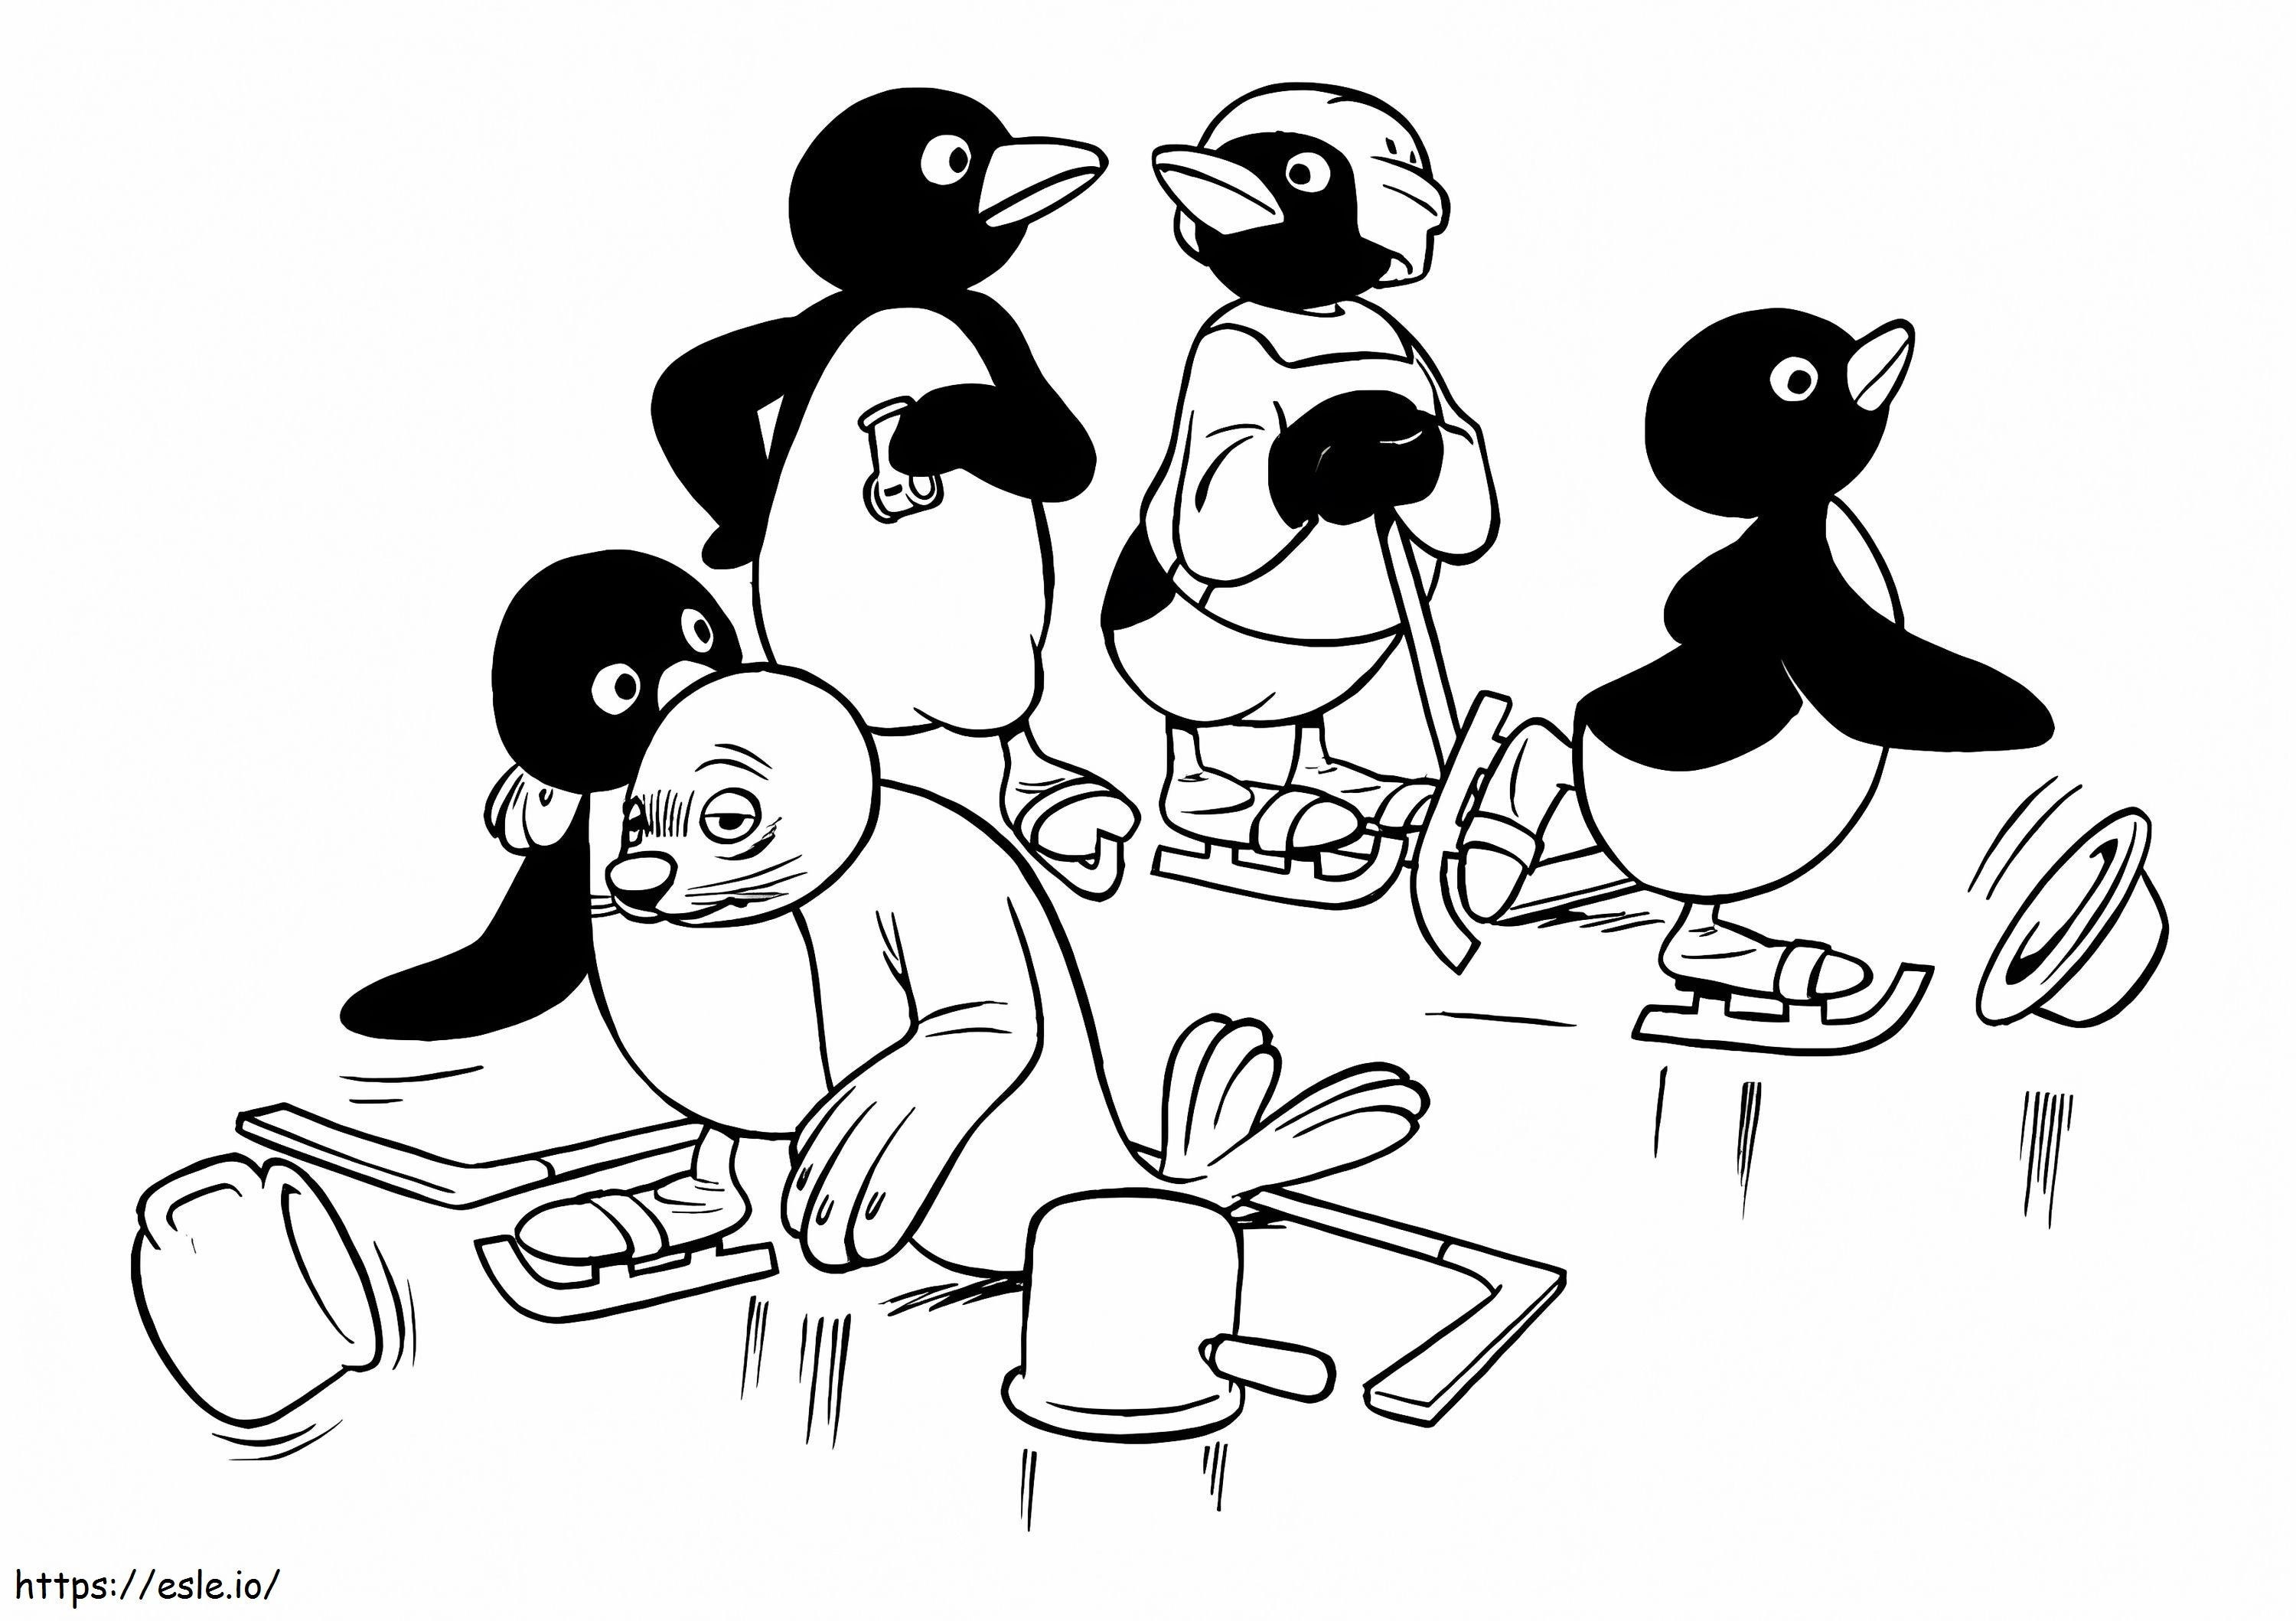 Pingu-Team ausmalbilder